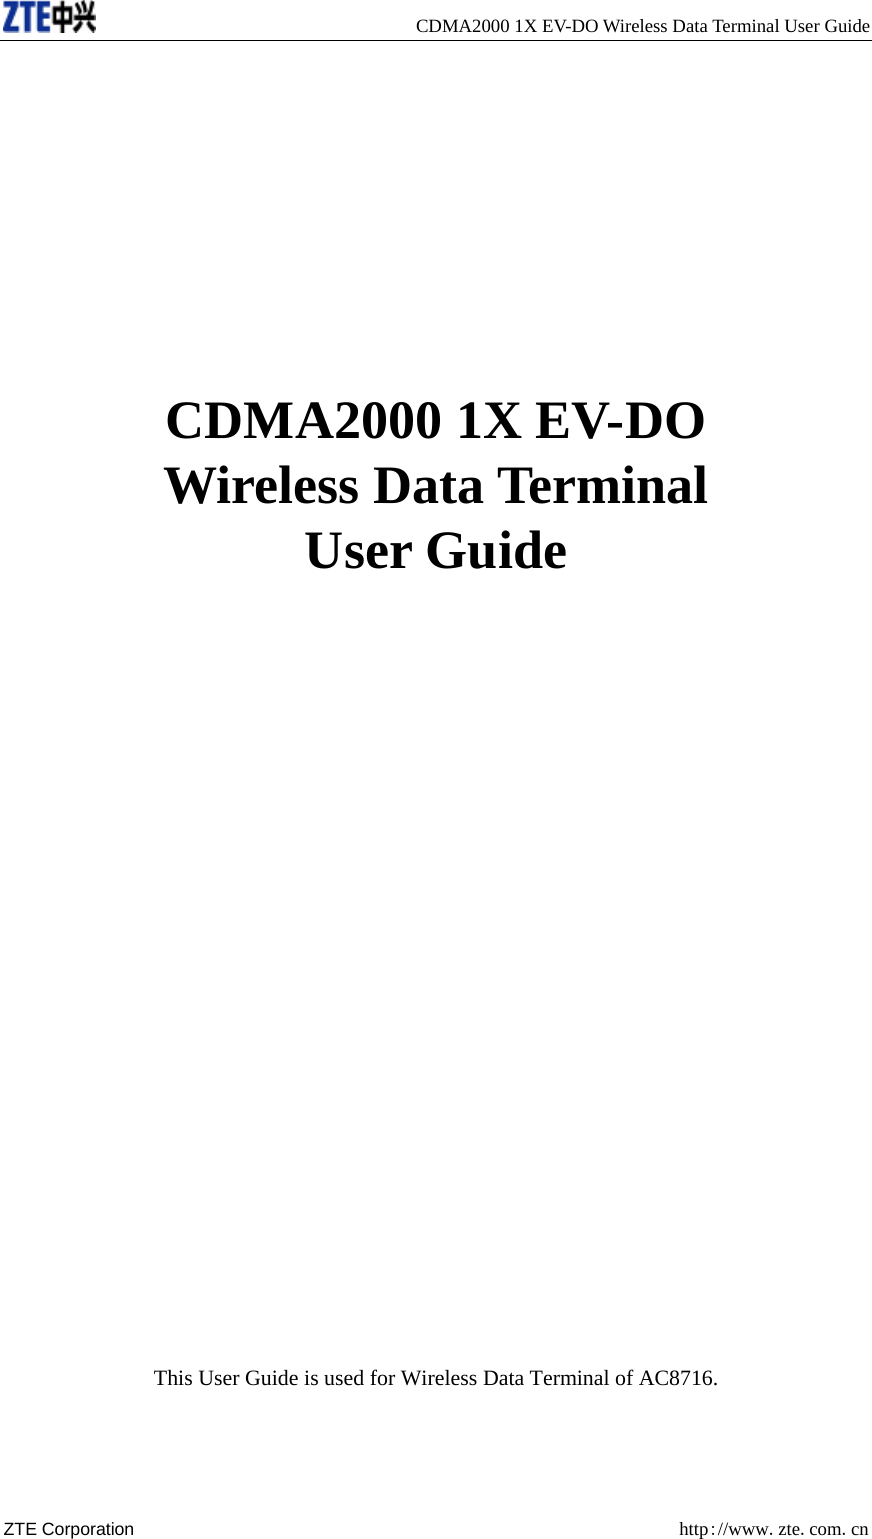   CDMA2000 1X EV-DO Wireless Data Terminal User Guide ZTE Corporation  http://www.zte.com.cn        CDMA2000 1X EV-DO Wireless Data Terminal User Guide                         This User Guide is used for Wireless Data Terminal of AC8716. 